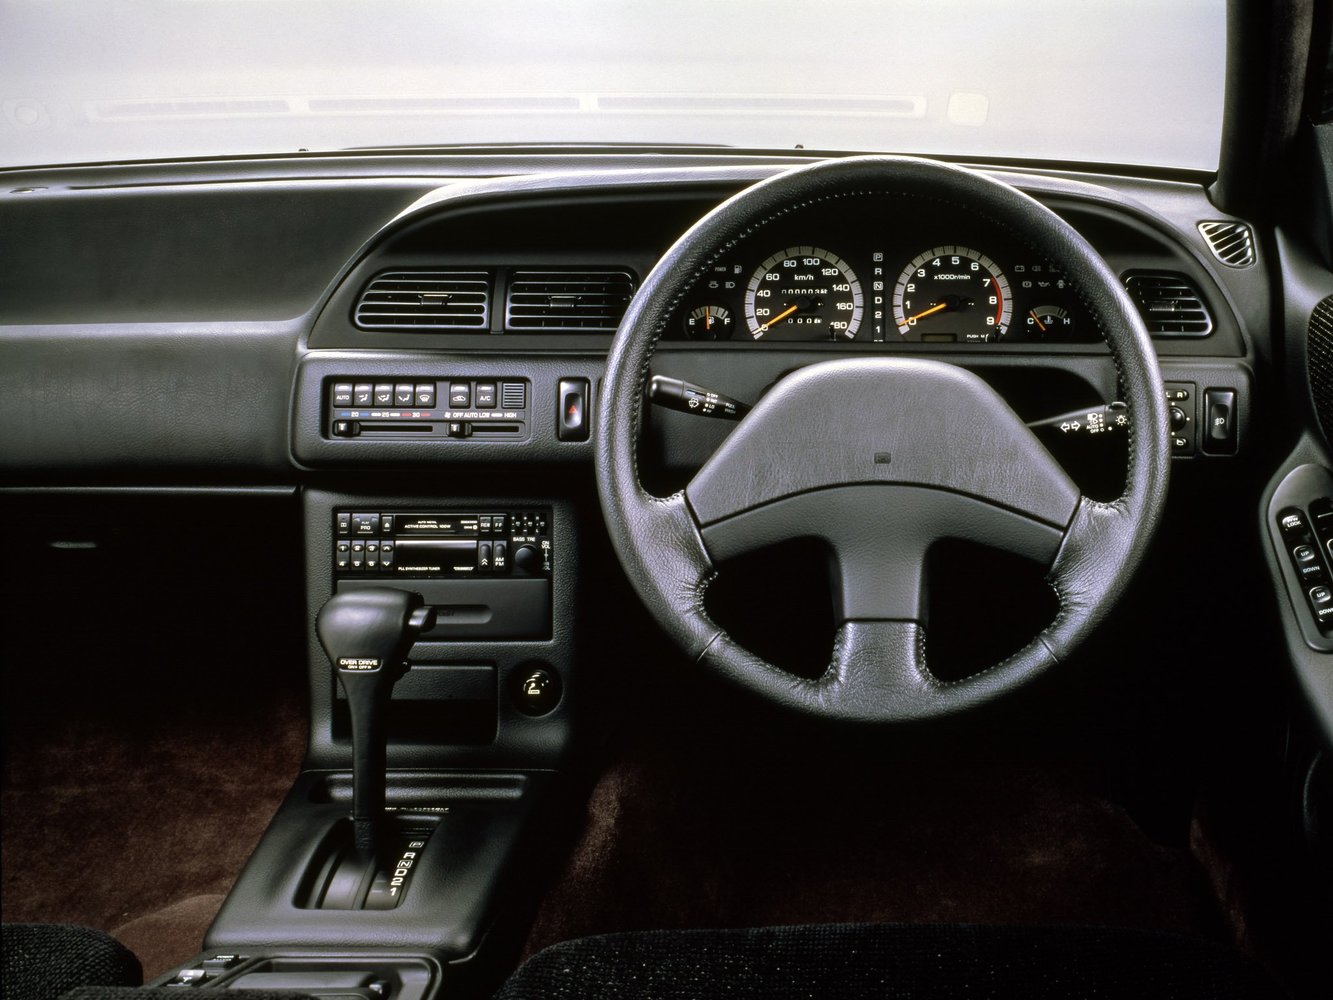 седан Nissan Cefiro 1988 - 1994г выпуска модификация 2.0 AT (125 л.с.)